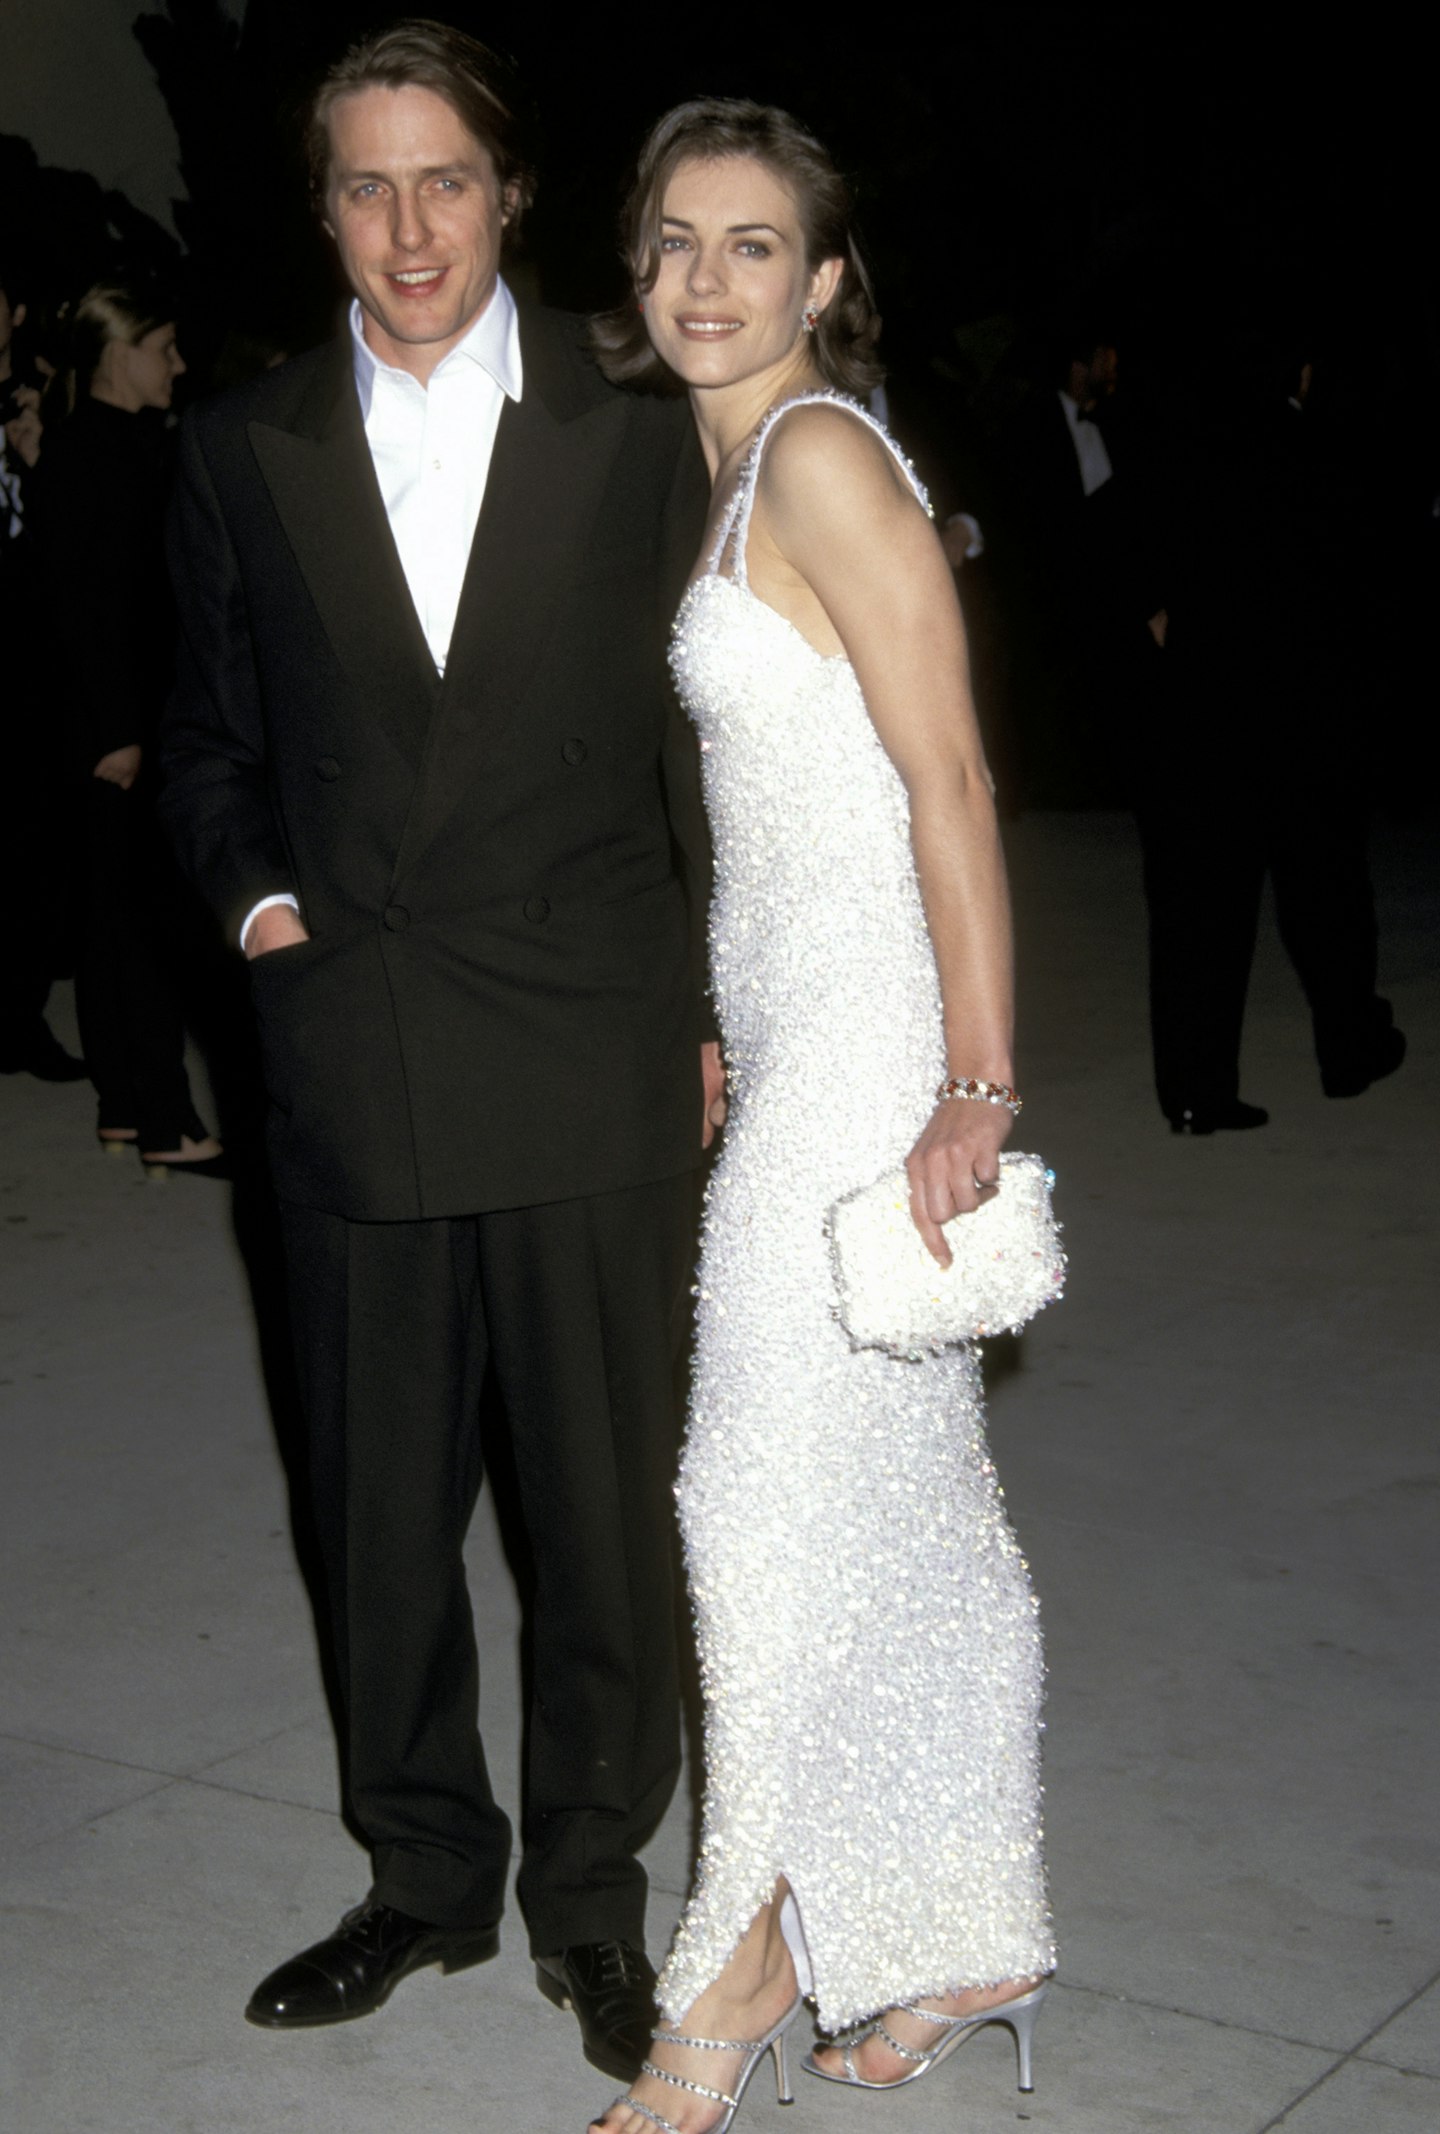 Hugh Grant and Elizabeth Hurley